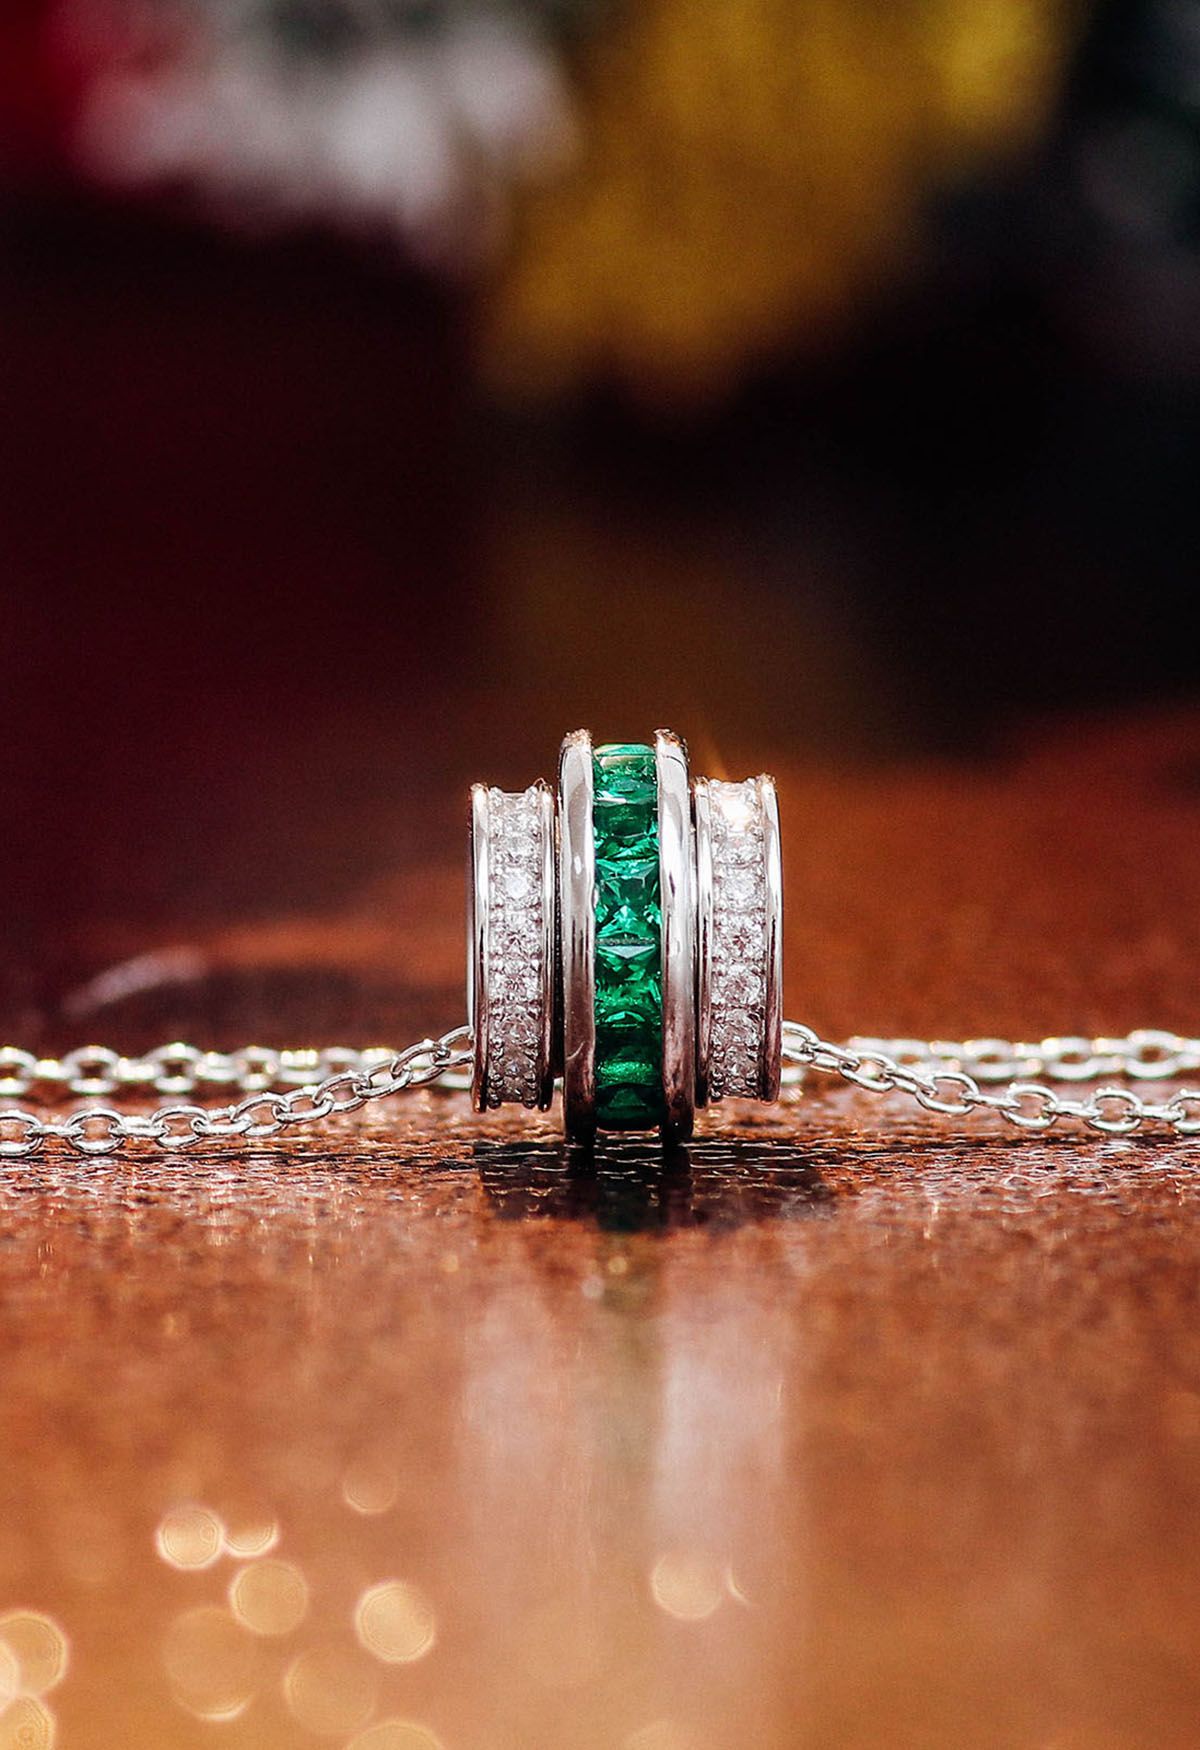 Collana di gemme di smeraldo tonda vuota